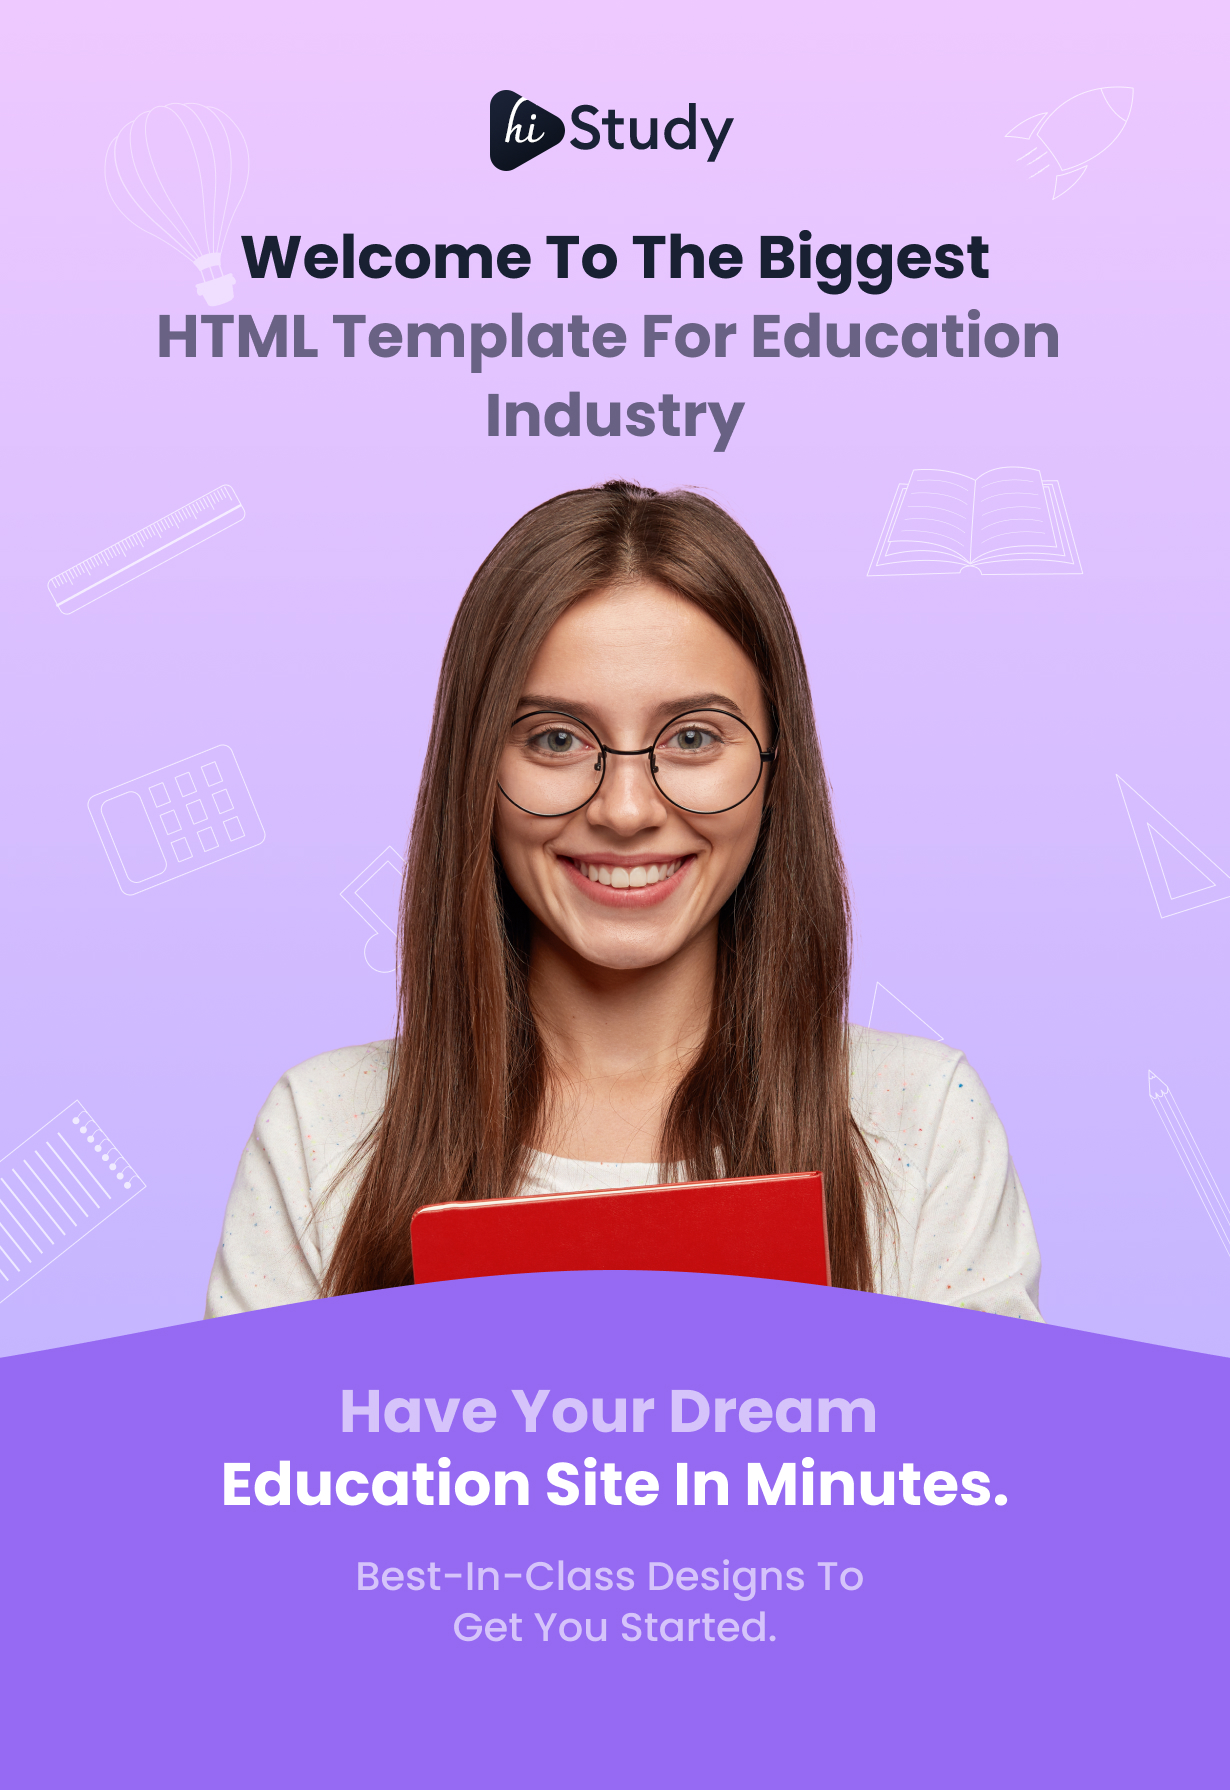 HiStudy - Online Courses & Education Template - 5